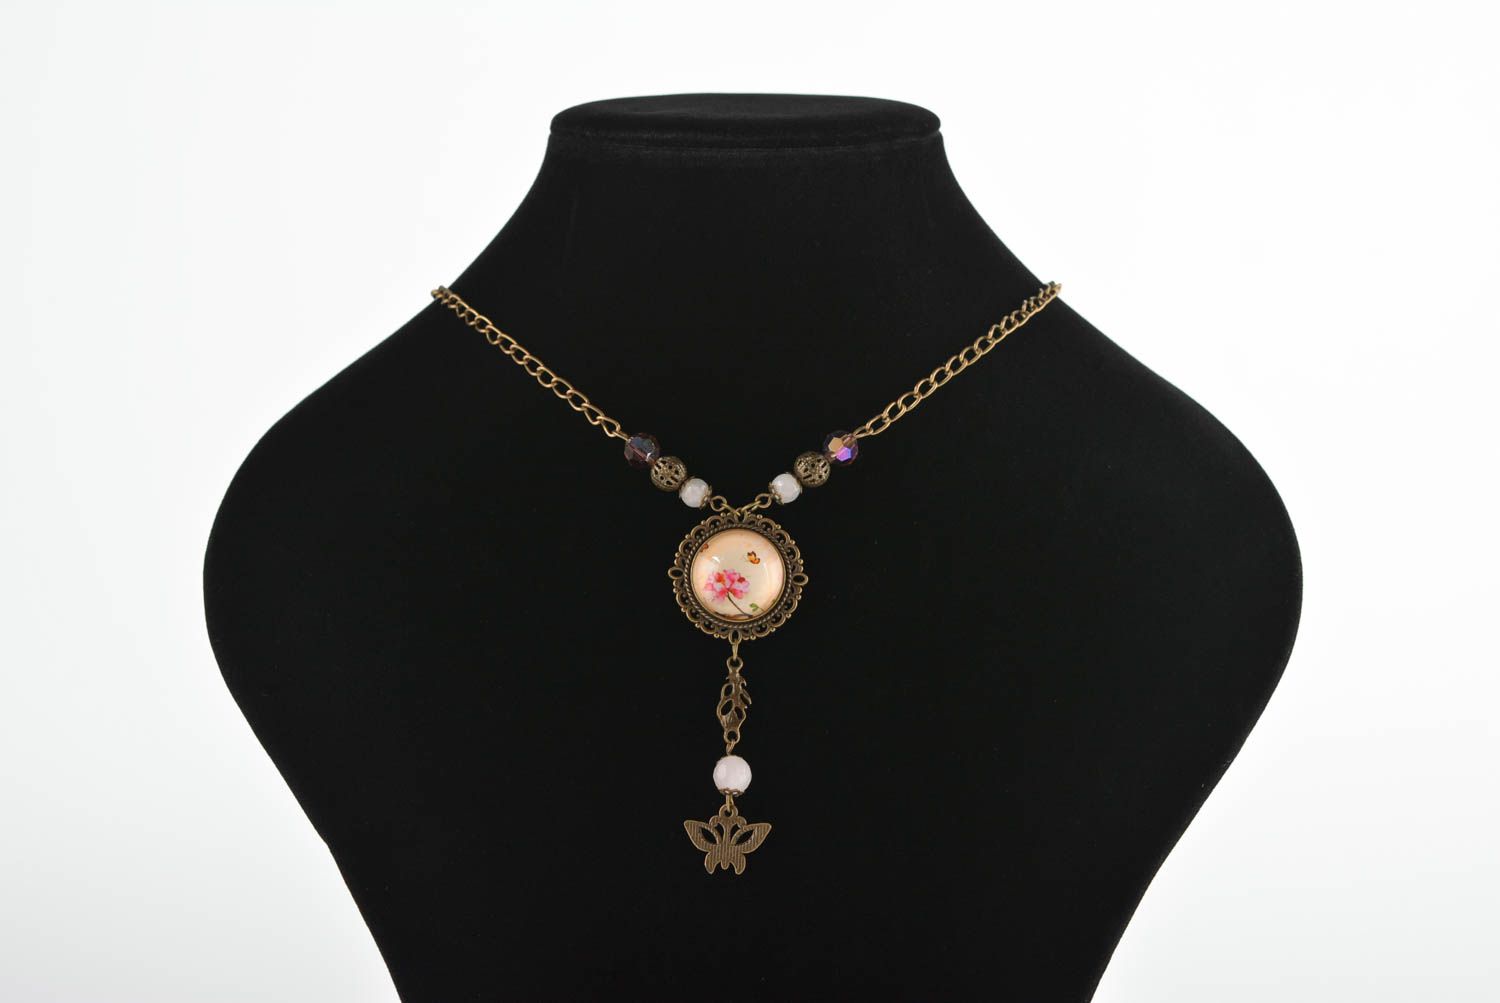 Unusual handmade glass pendant metal necklace metal jewelry designs gift ideas photo 1